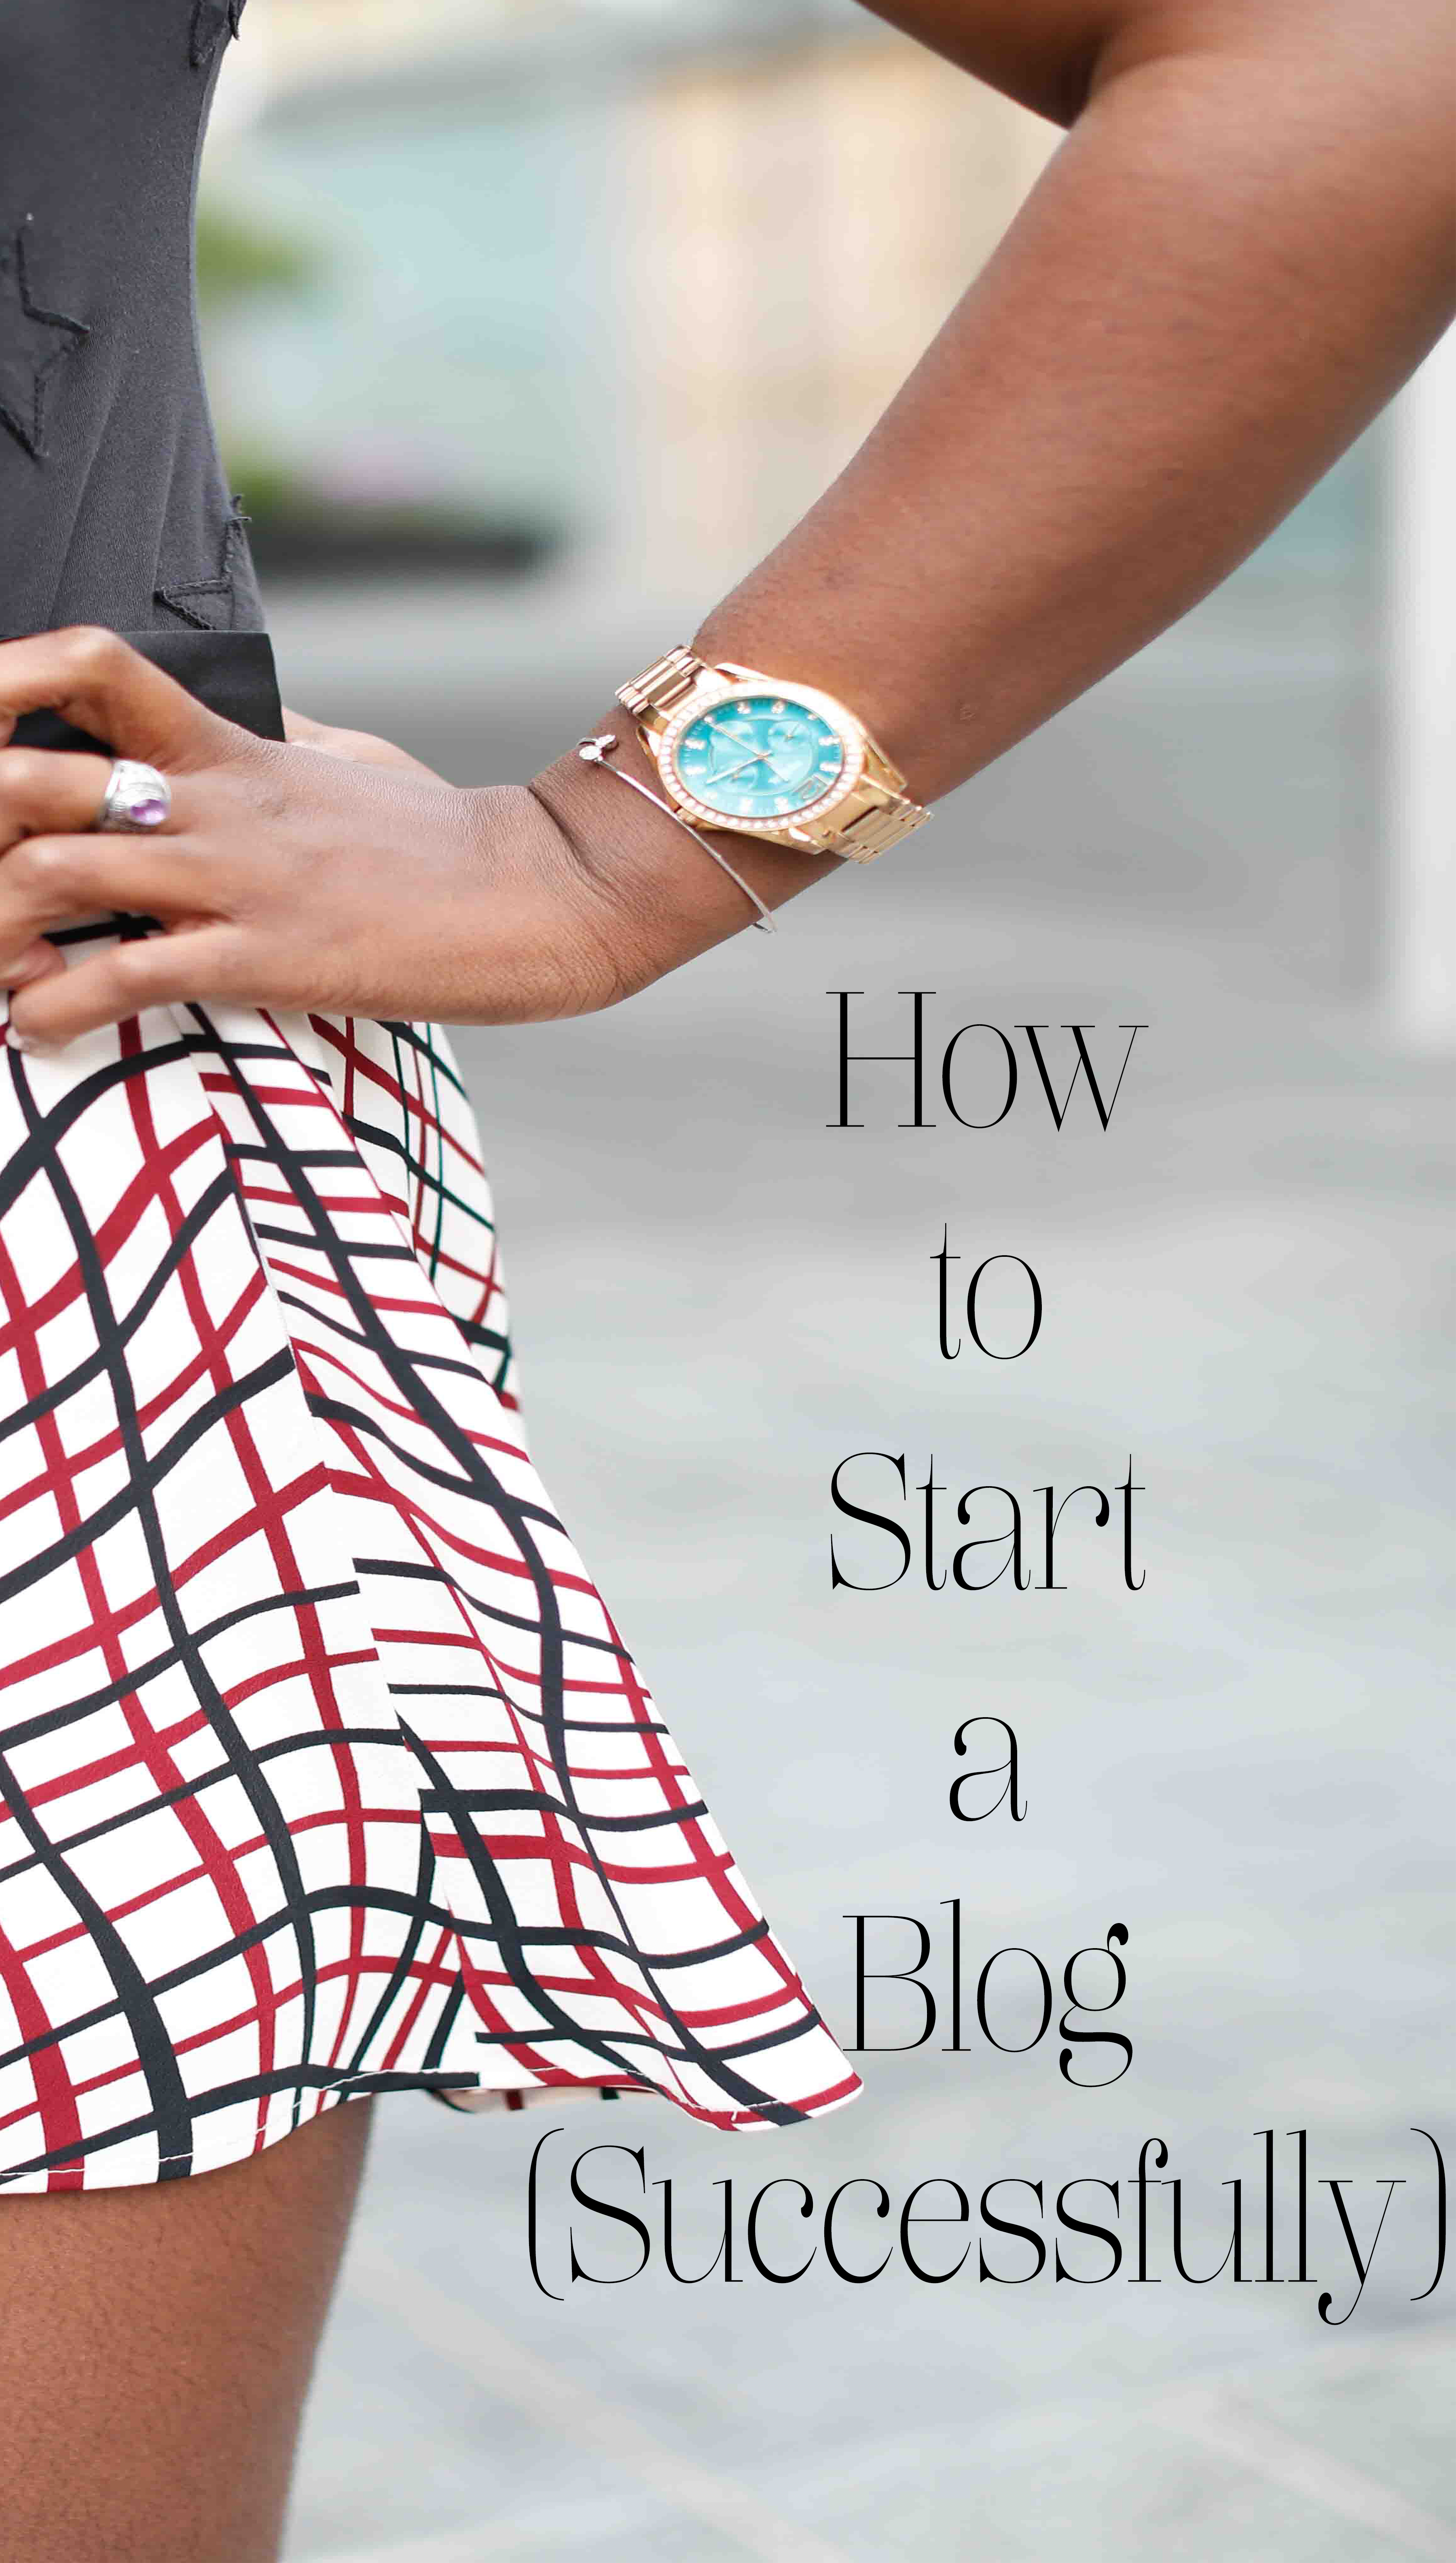 Jordan Taylor C - How to Start A Blog (Successfully)